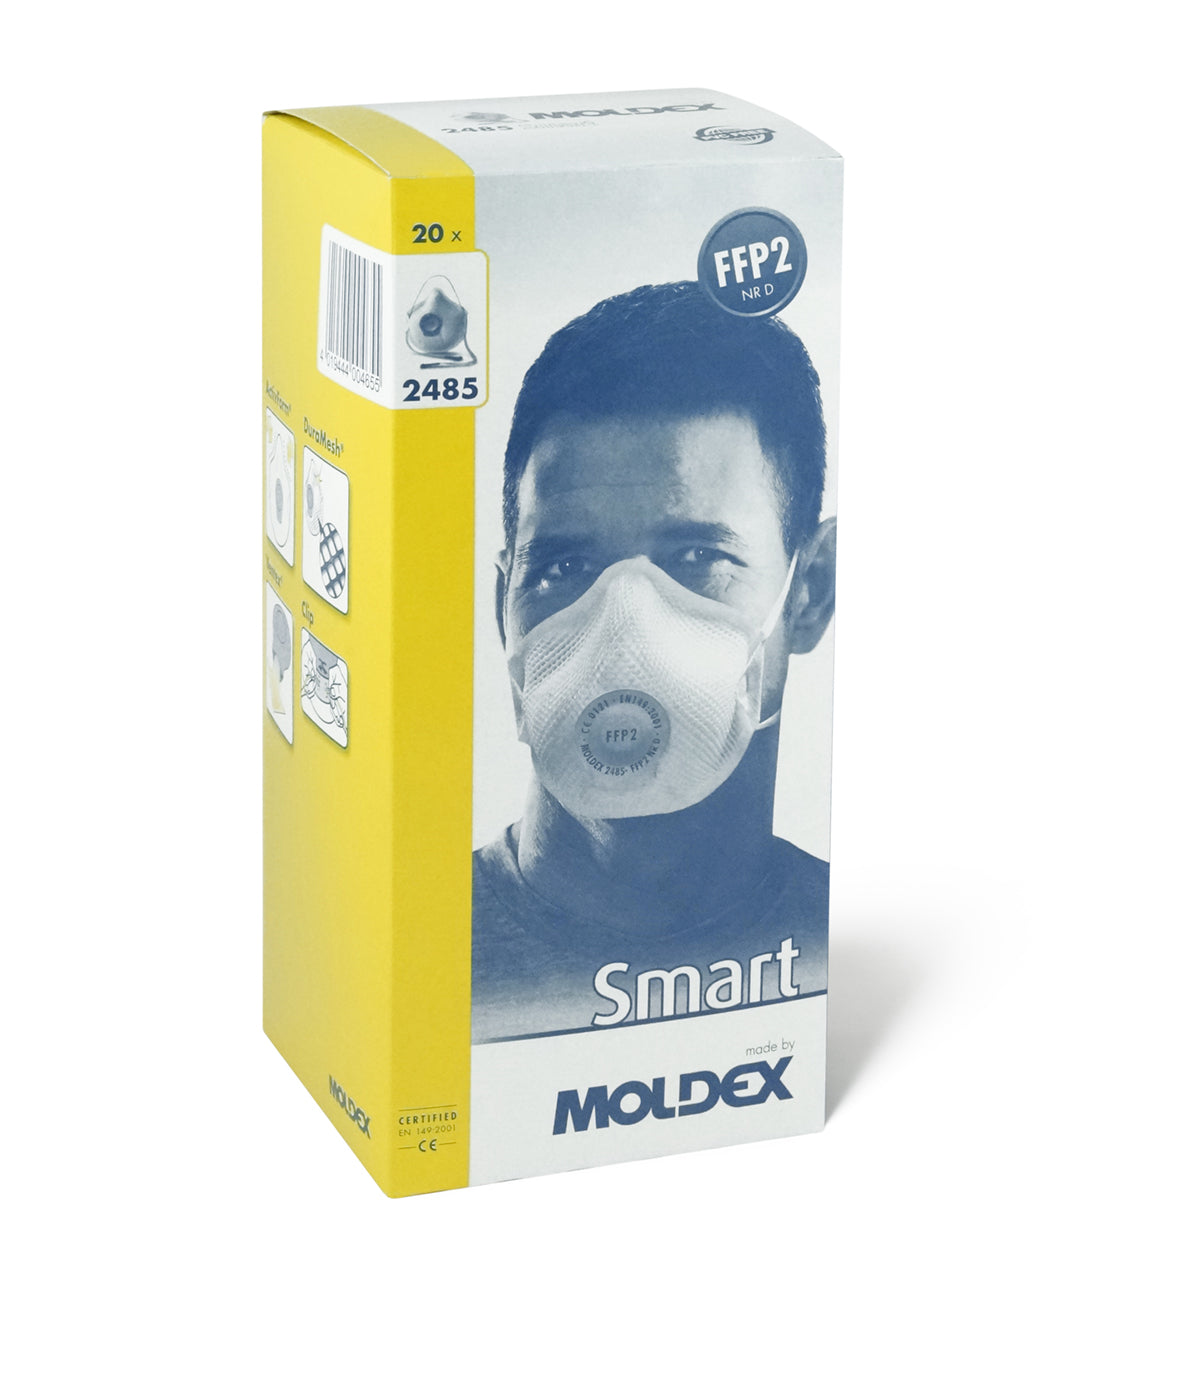 Moldex 2485 Smart FFP2 Valved Mask (Box of 20) - DaltonSafety